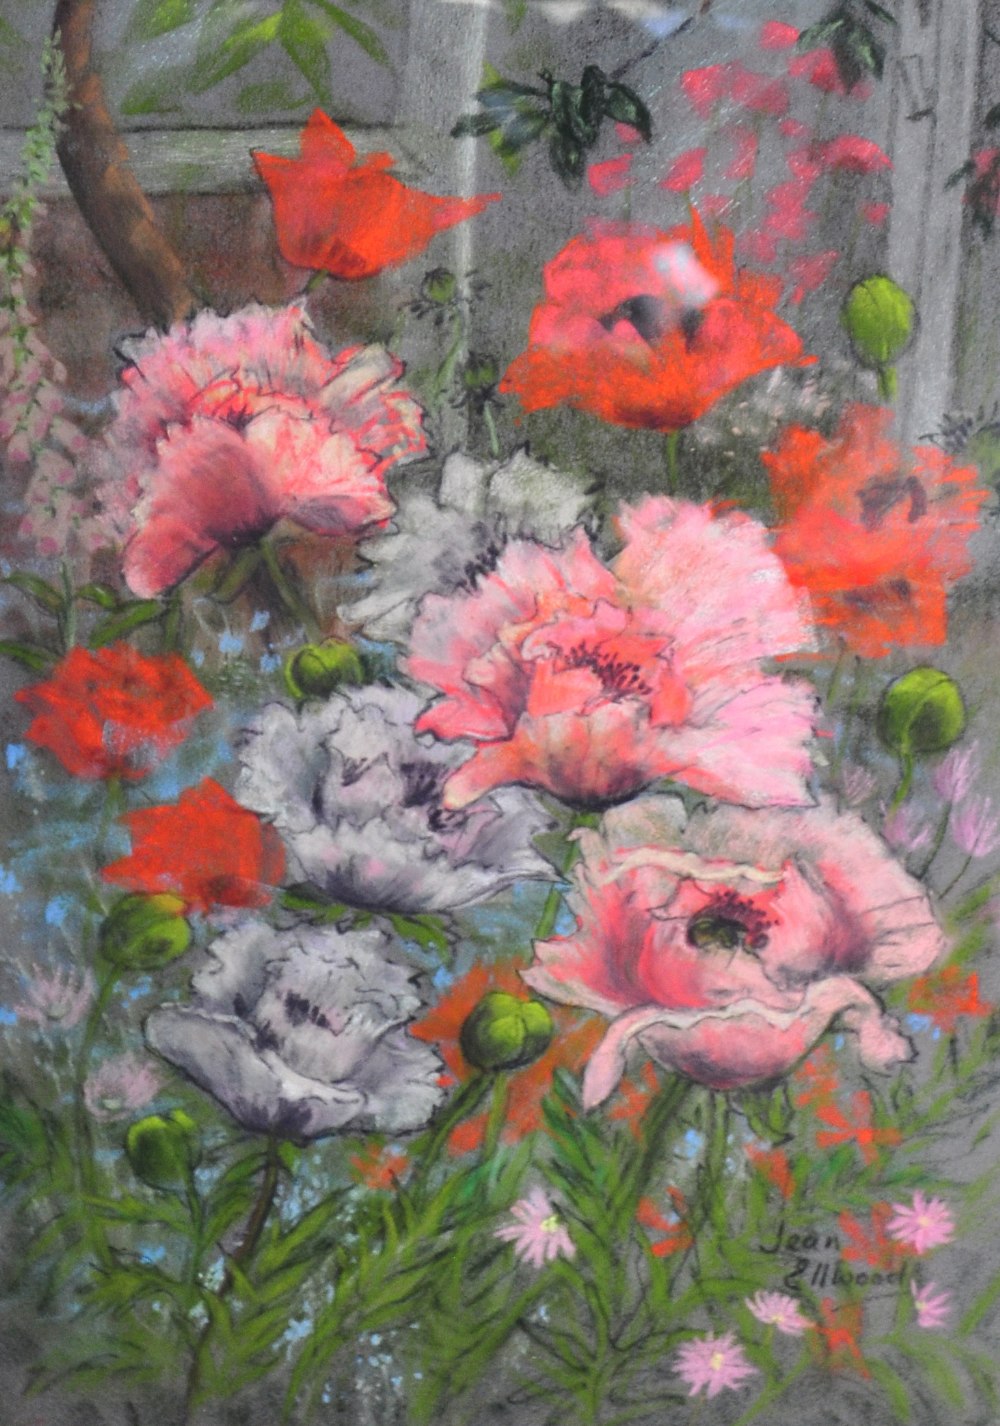 JEAN ELLWOOD; pastel, "Poppy Corner", signed, inscribed on label verso, 48 x 30. - Image 2 of 2